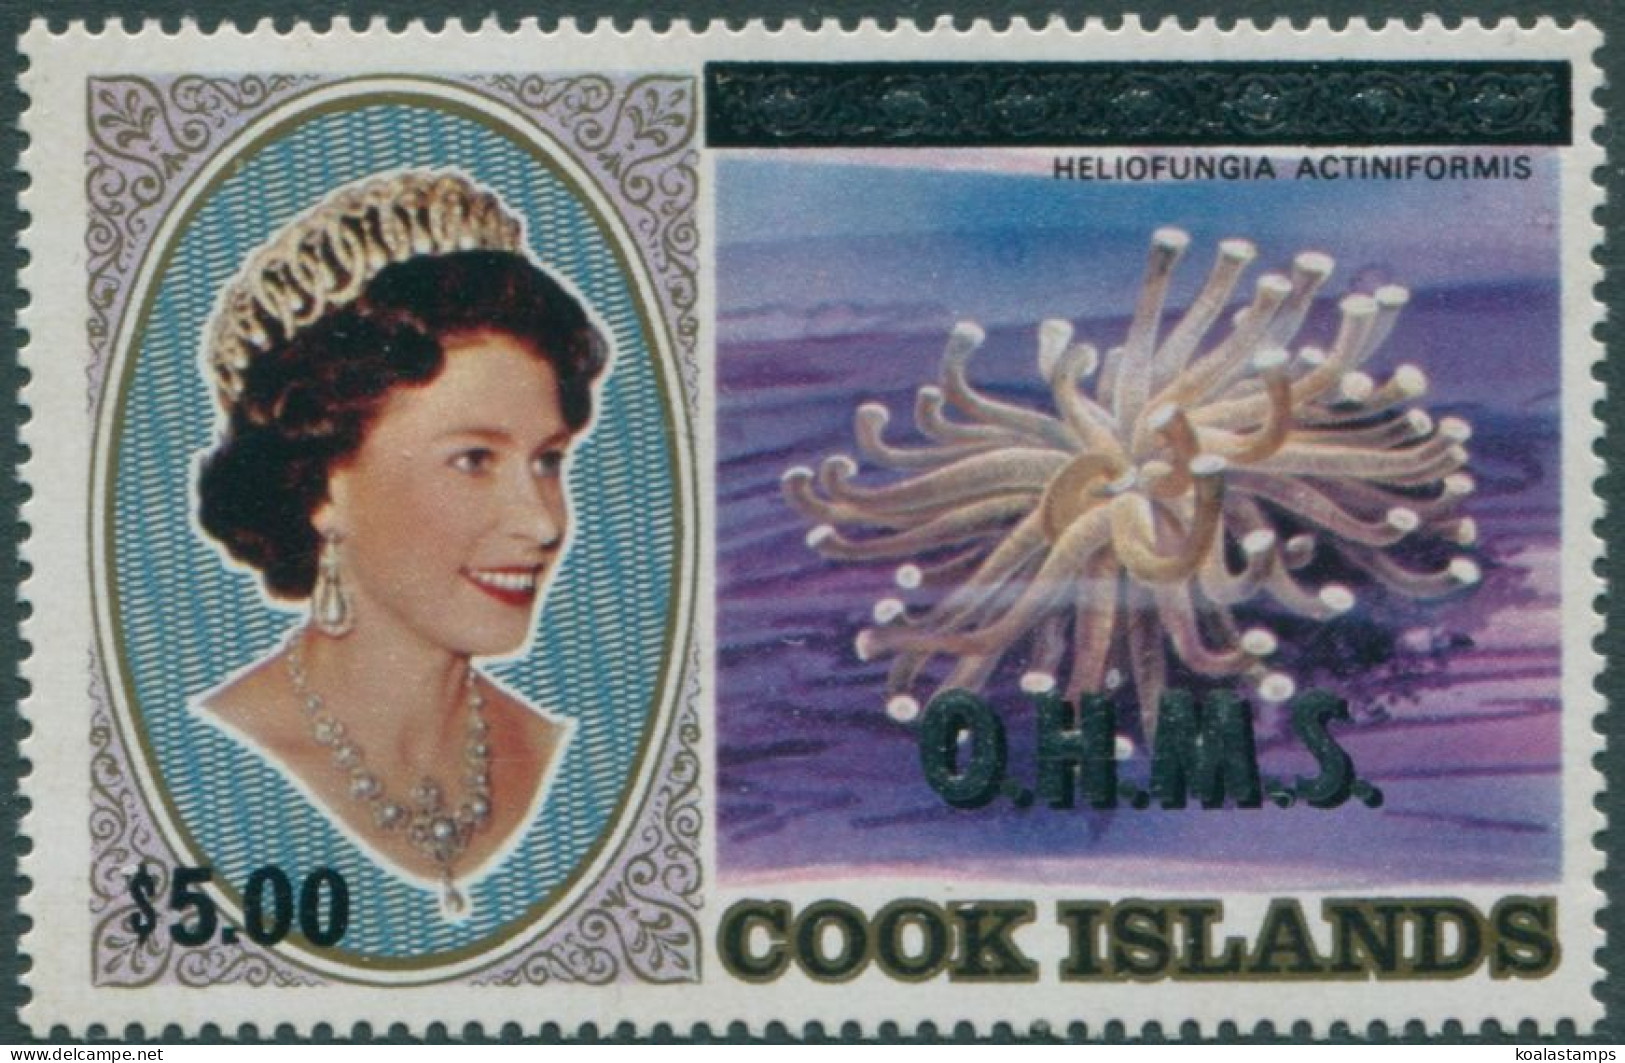 Cook Islands OHMS 1985 SGO50 $5 On $3 Coral QEII MNH - Cookeilanden